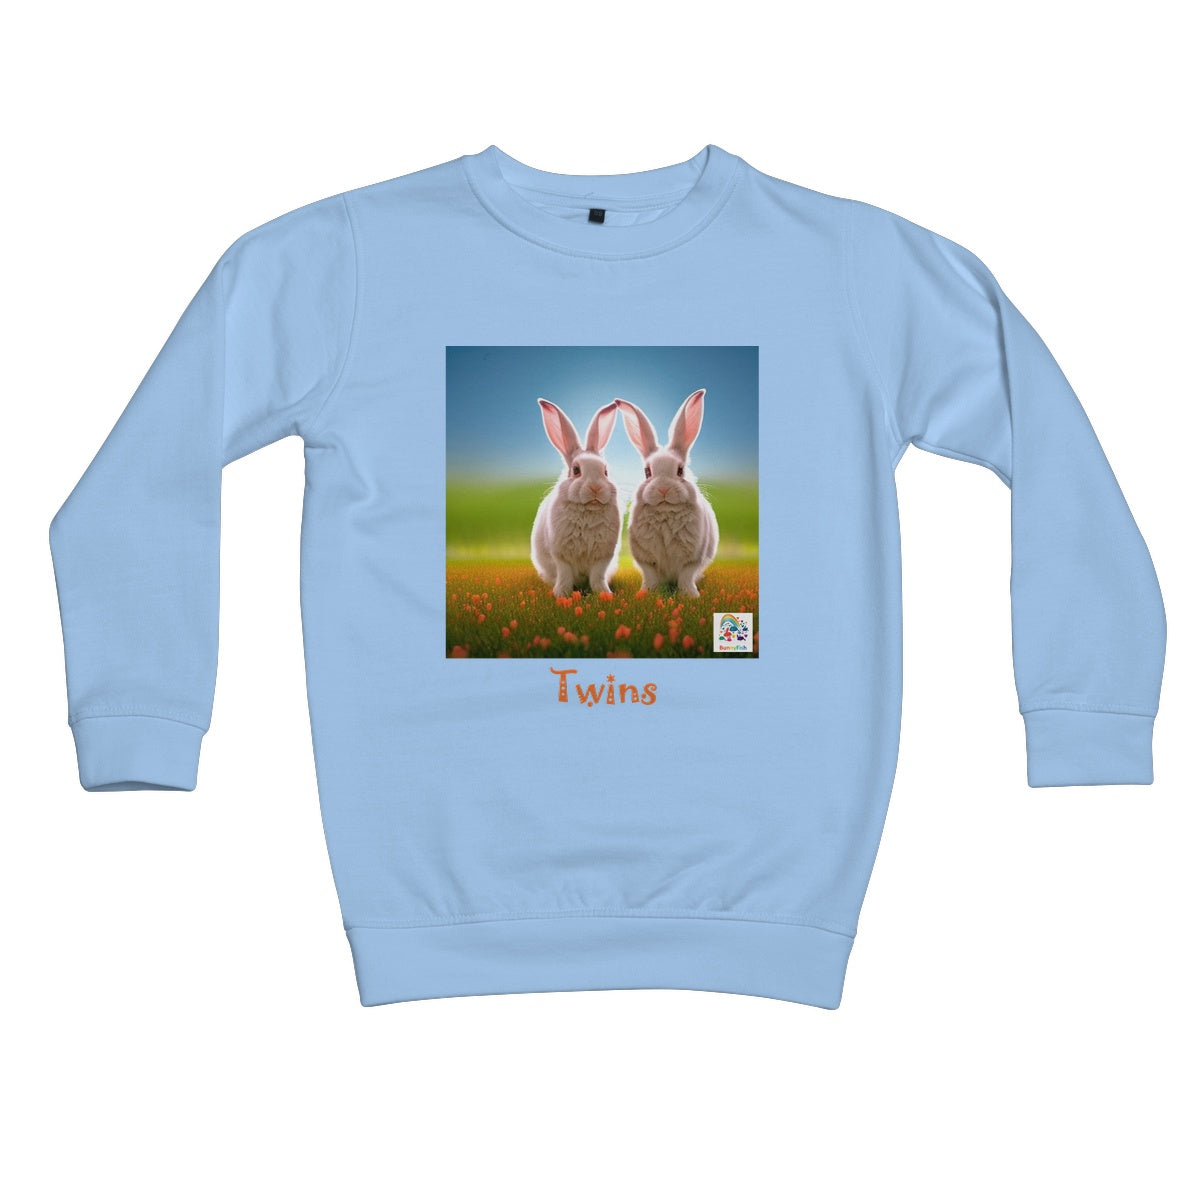 Twins Kids' Sweatshirt